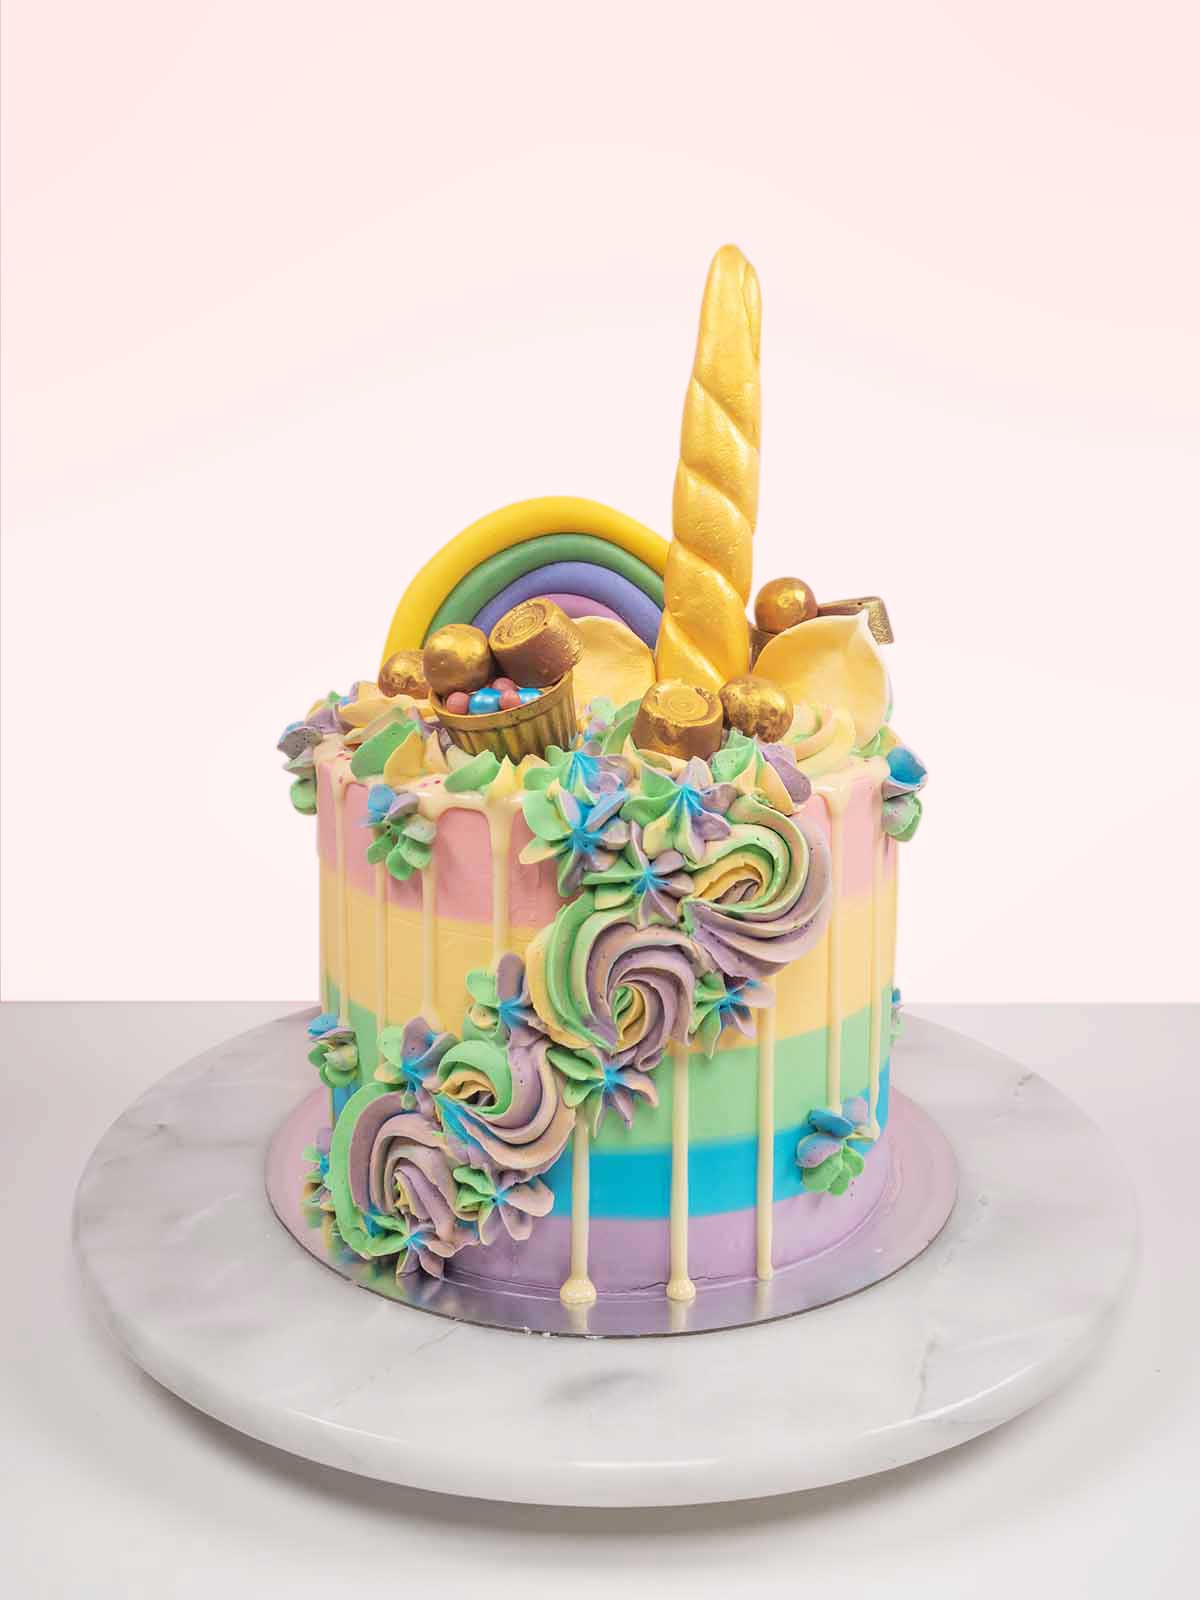 Rainbow Unicorn Cake by Megpi - Confetti Rainbow Velvet